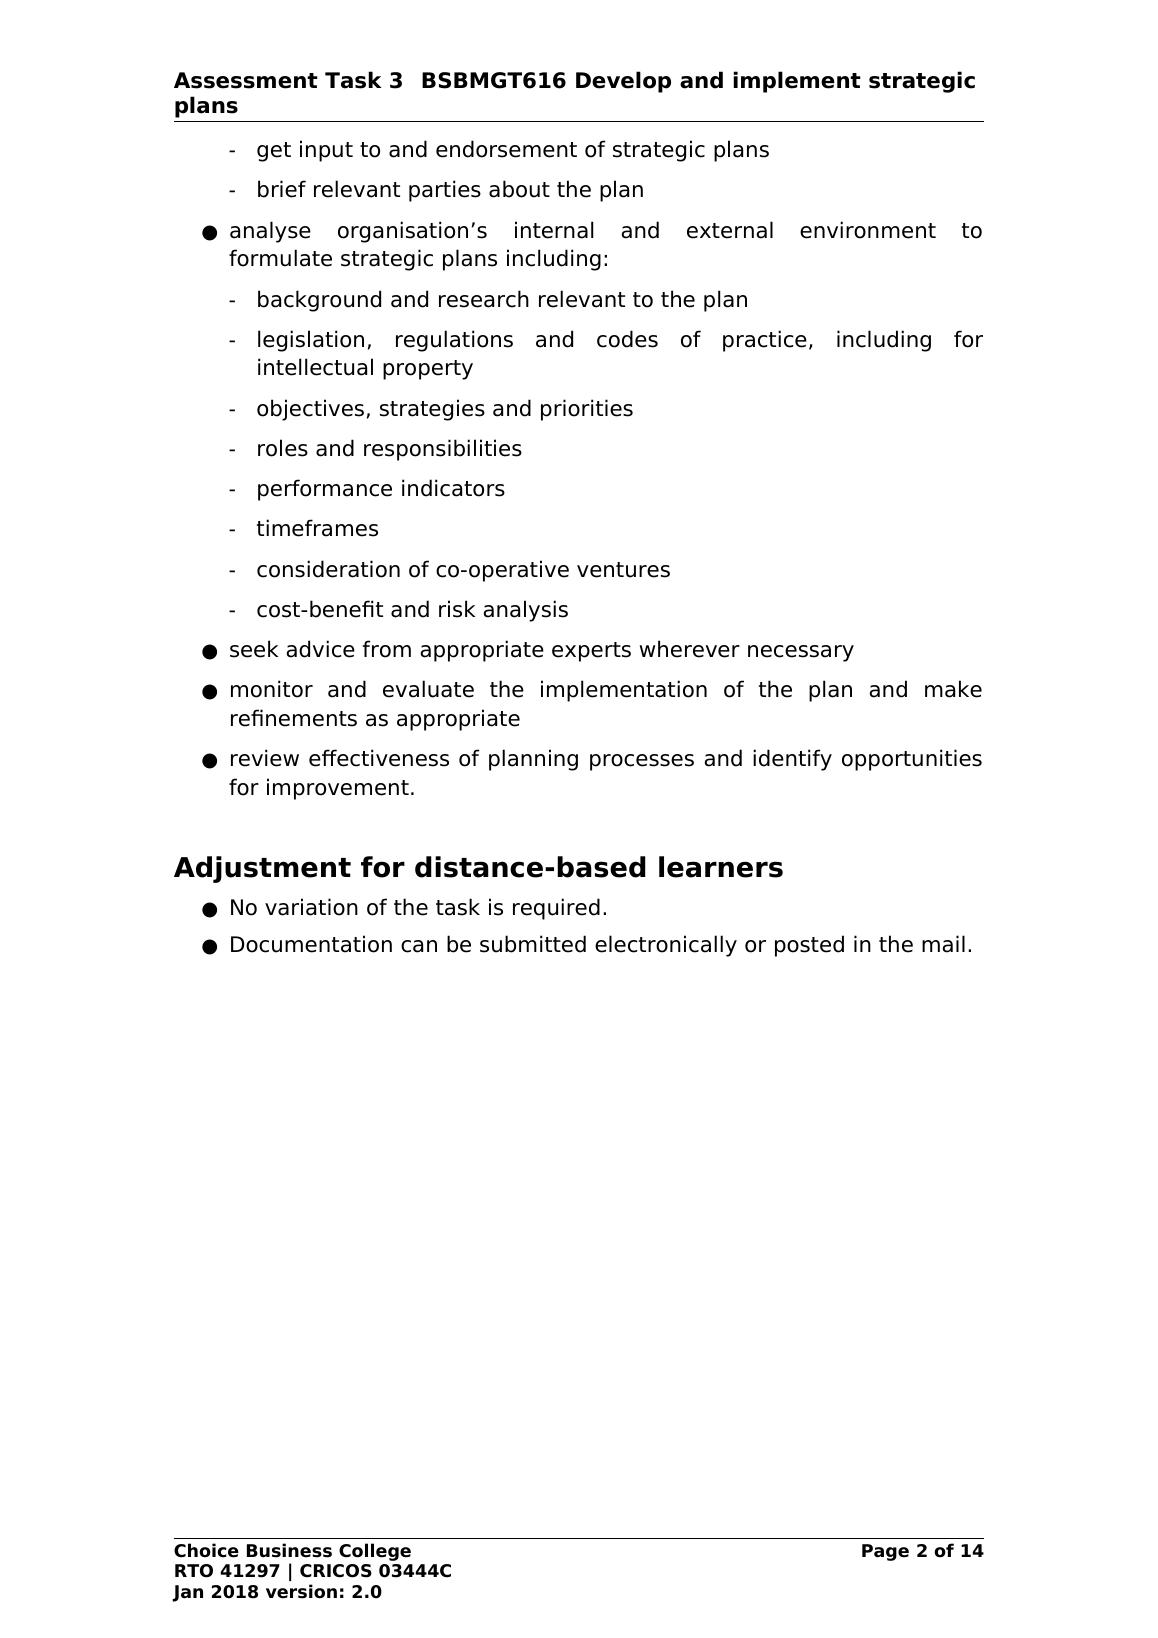 Assessment Task 3 BSBMGT616 Develop and Implement Strategic Plans_2